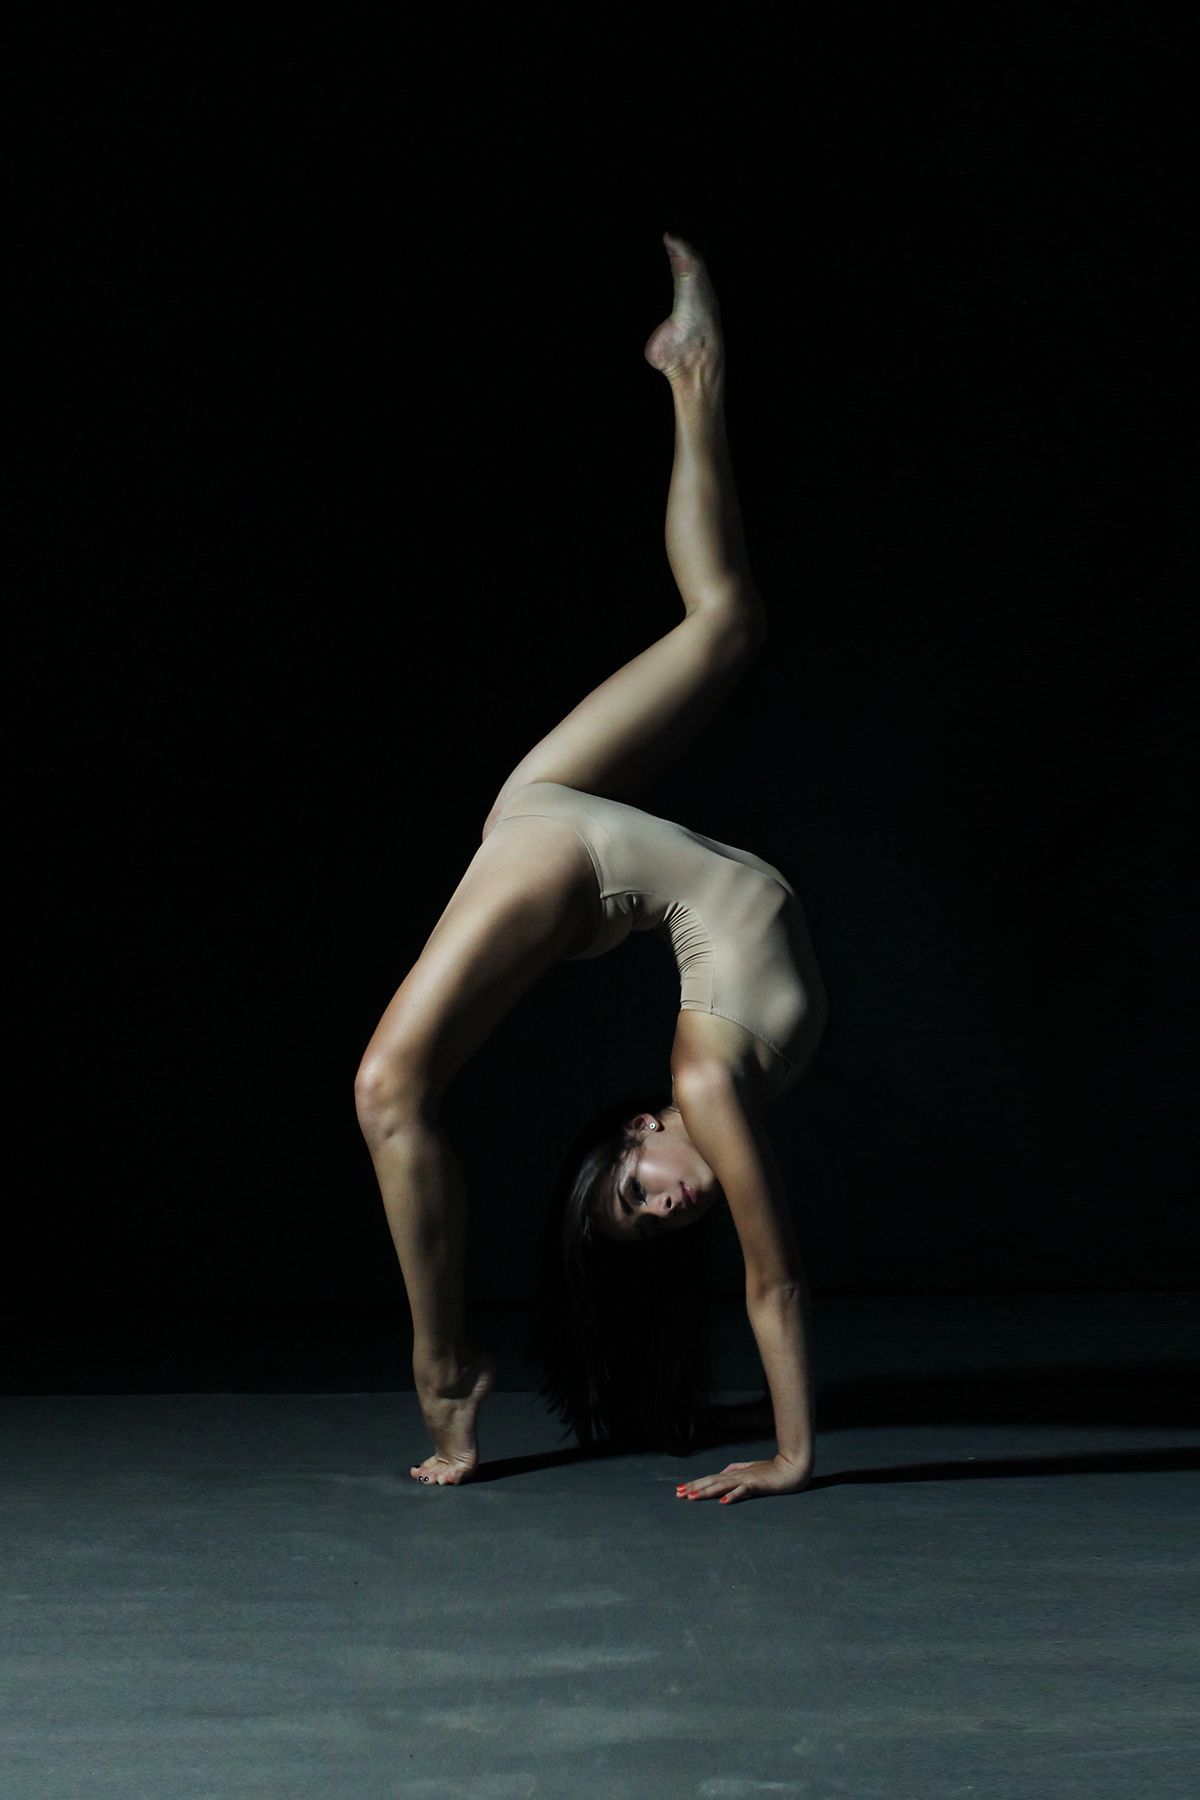 bailarina gimnasta luz contraste modelo mujer piel oscuro Bella dancer gymnast light contrast pattern skin